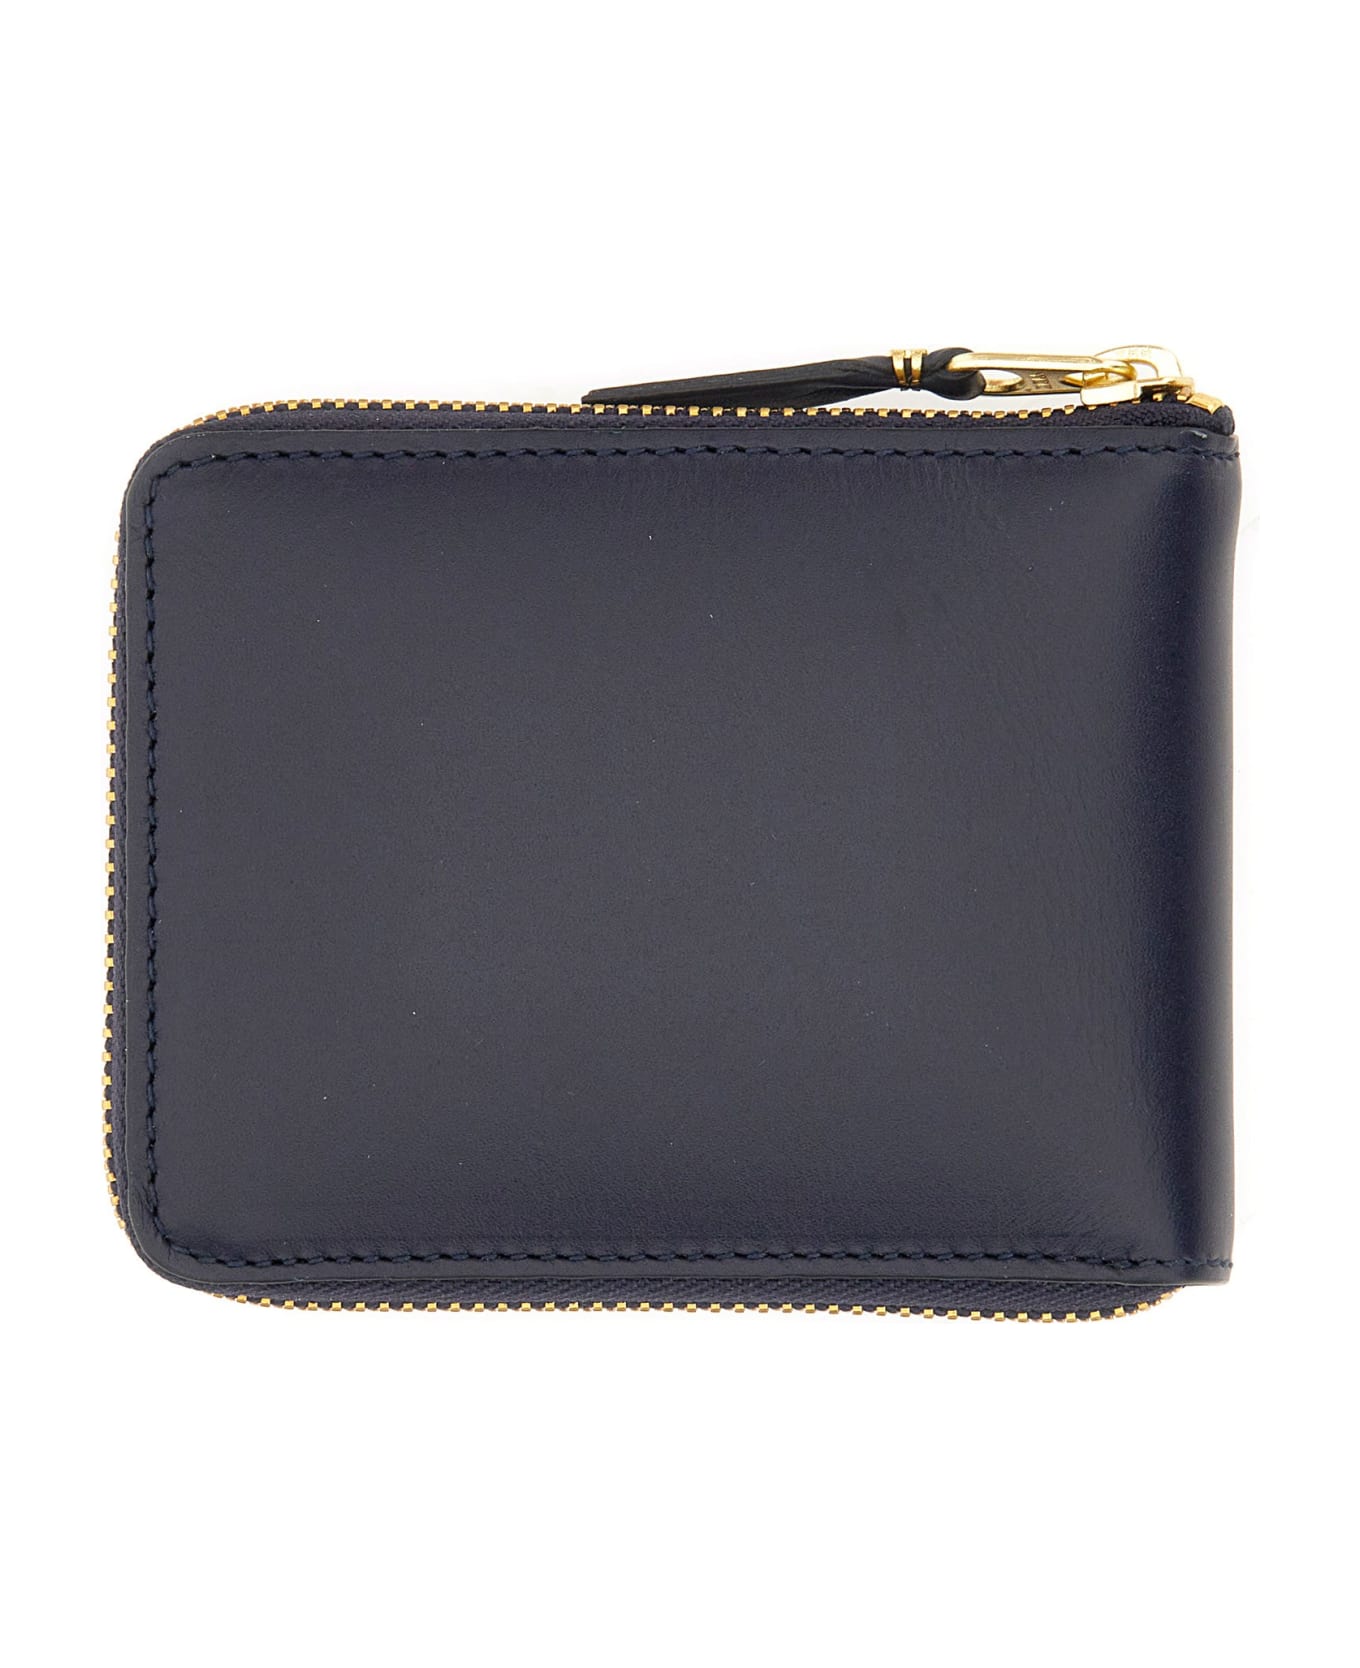 Comme des Garçons Wallet Zipped -around Classic Wallet - Navy 財布